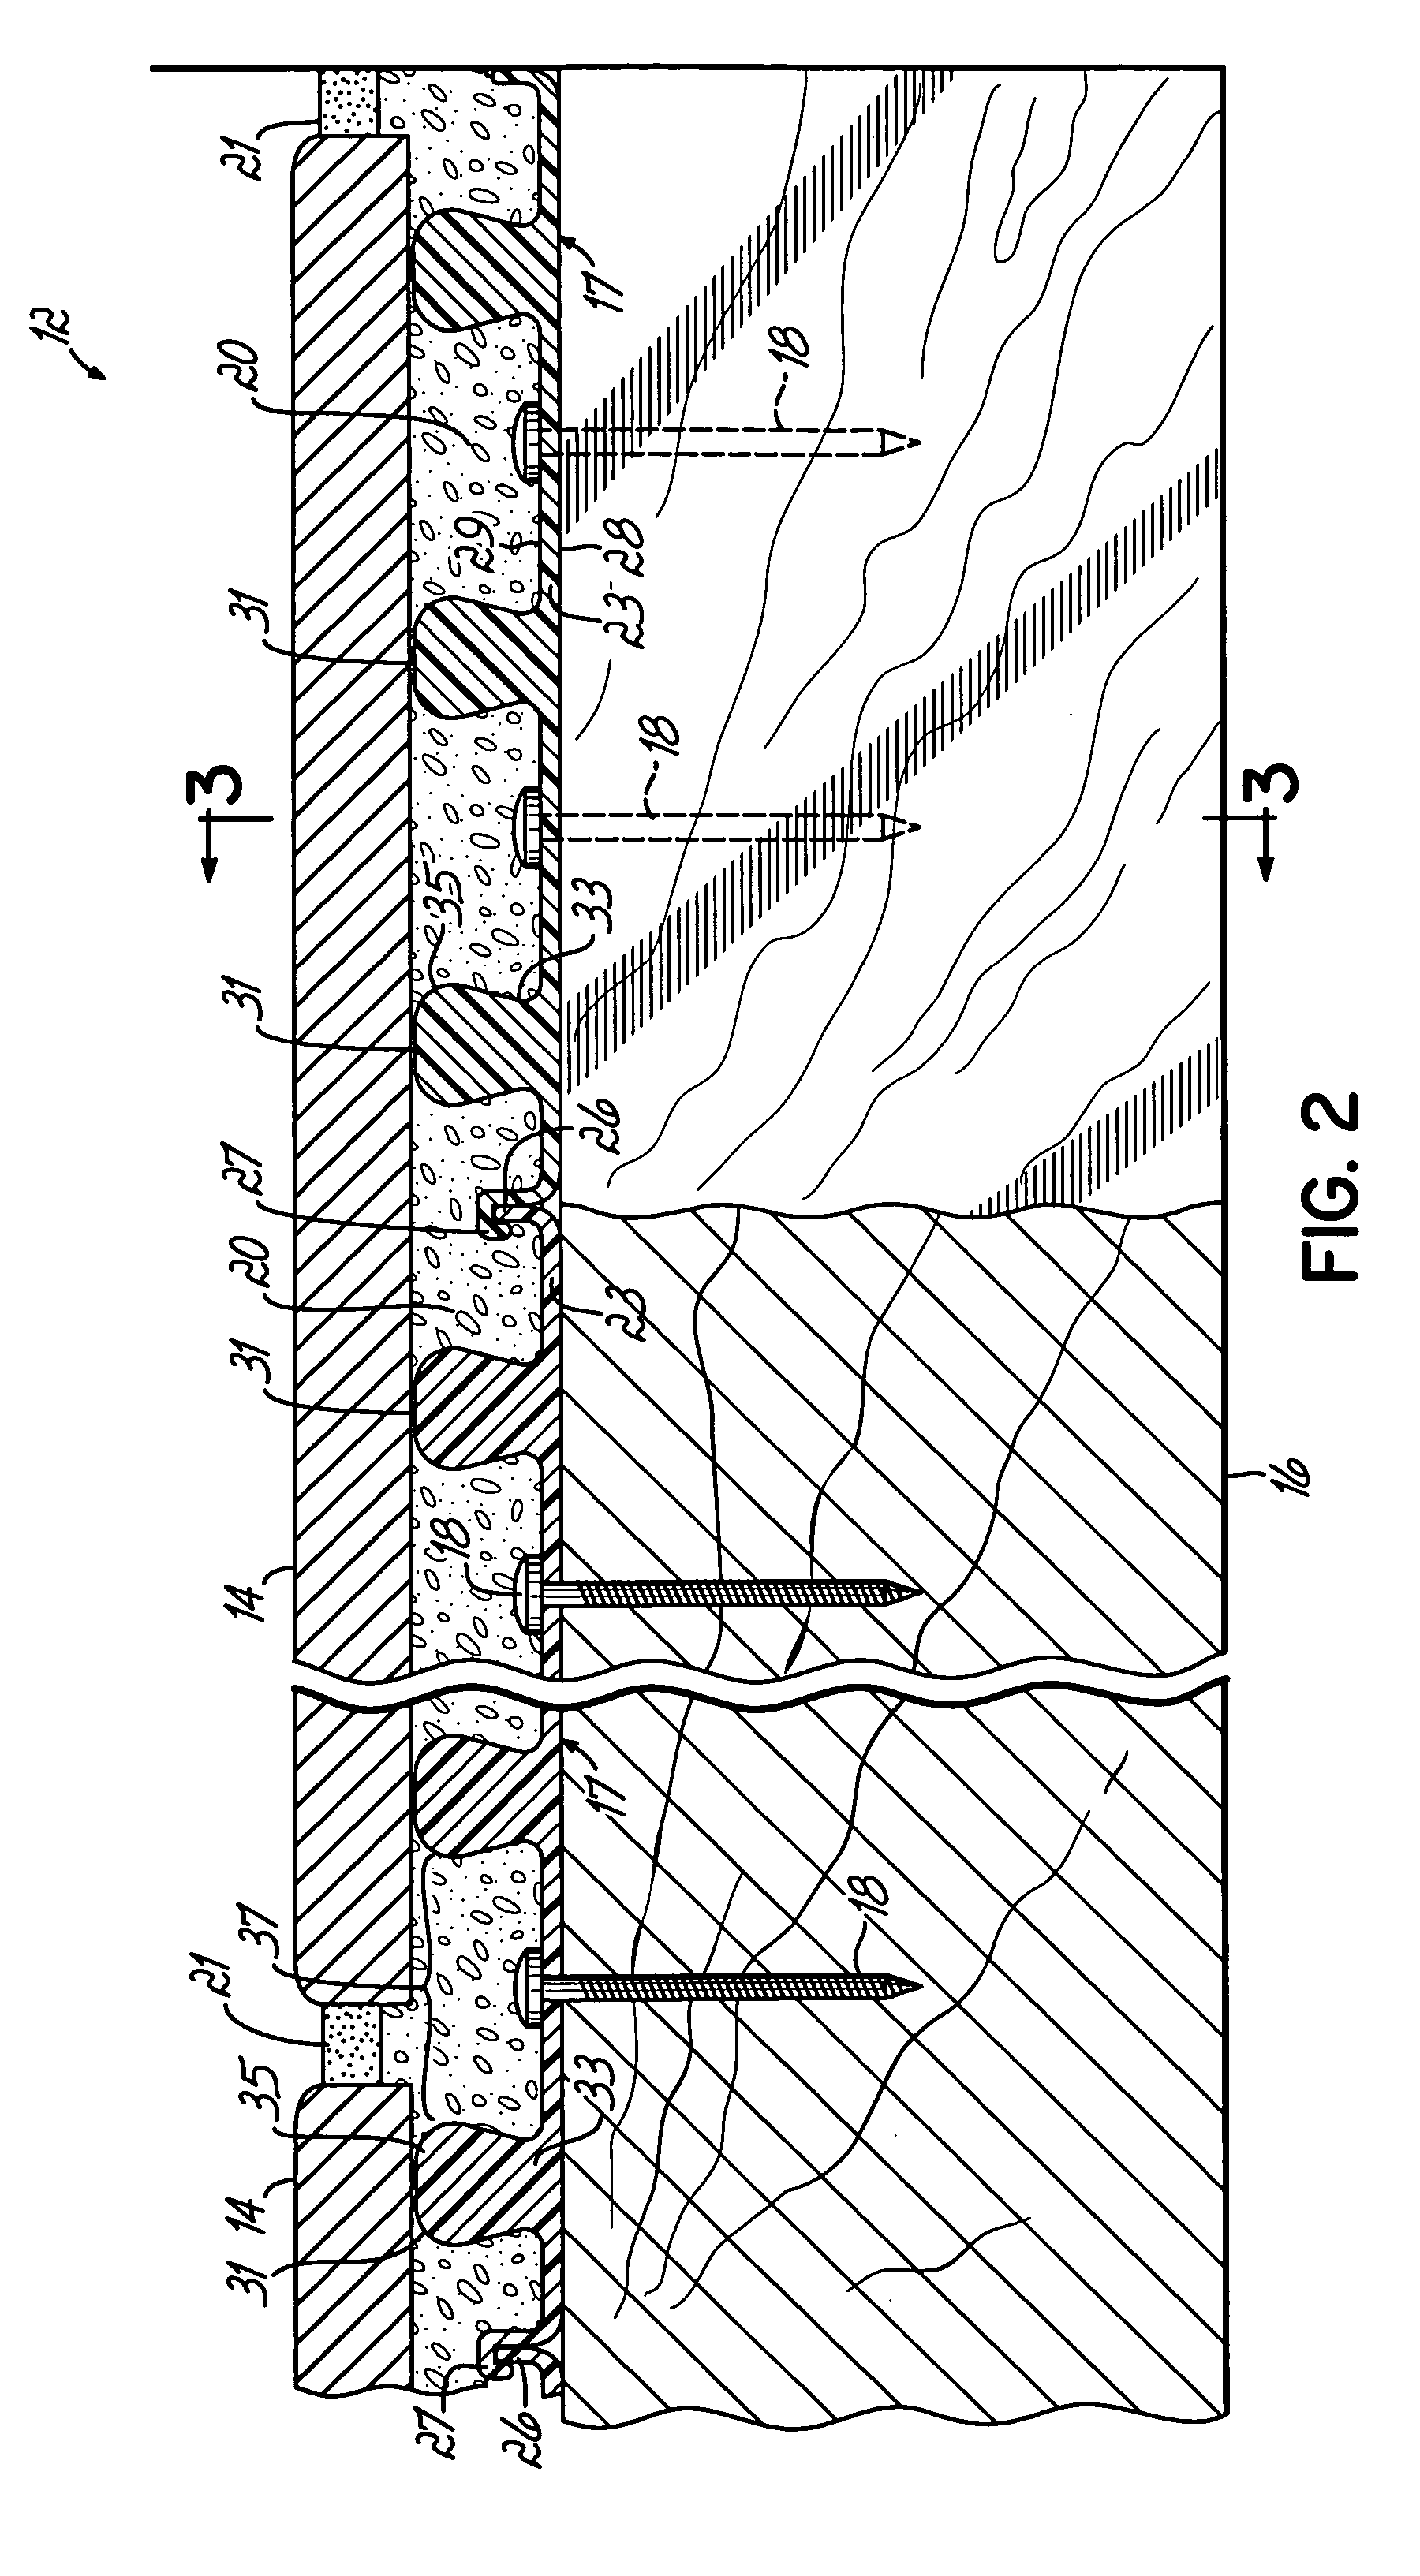 Underlayment for tile surface